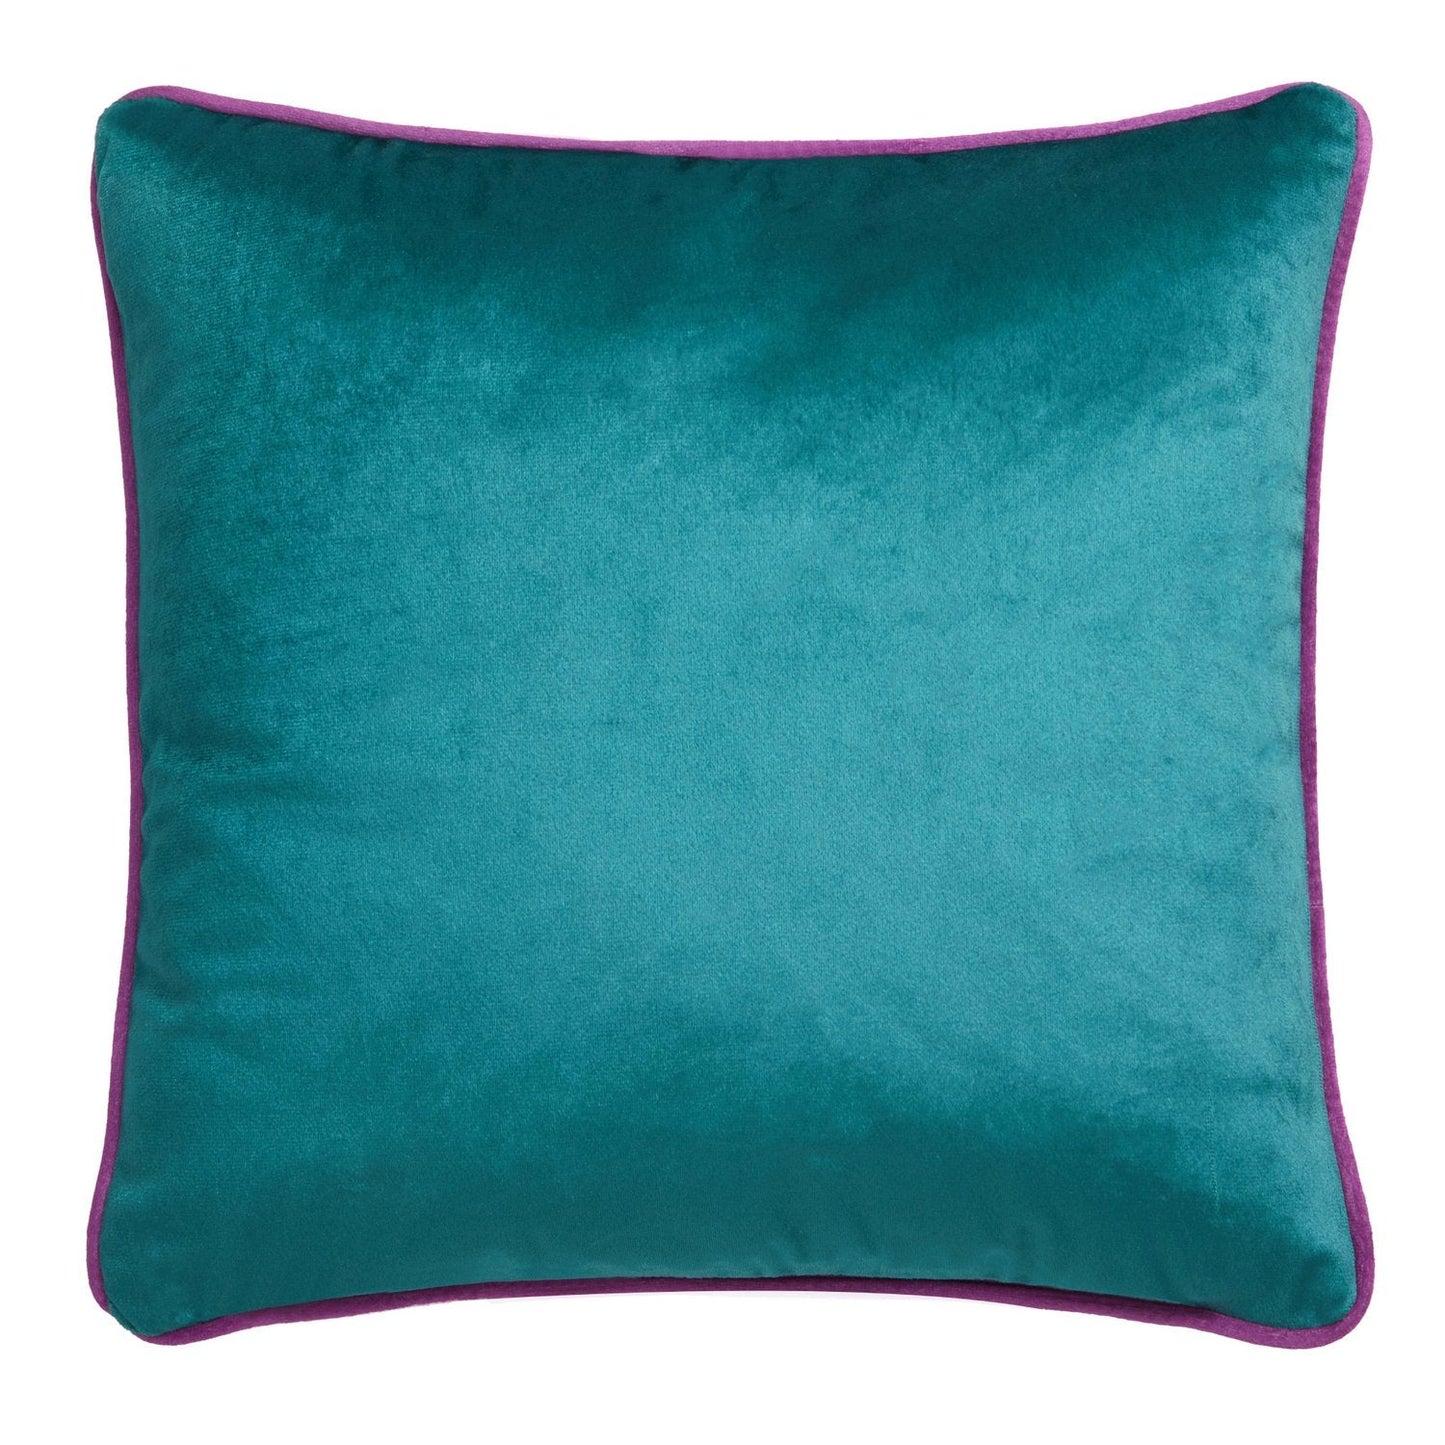 Laurence Llewelyn-Bowen Pants on Fire Blue Velvet Cushion (43cm x 43cm)